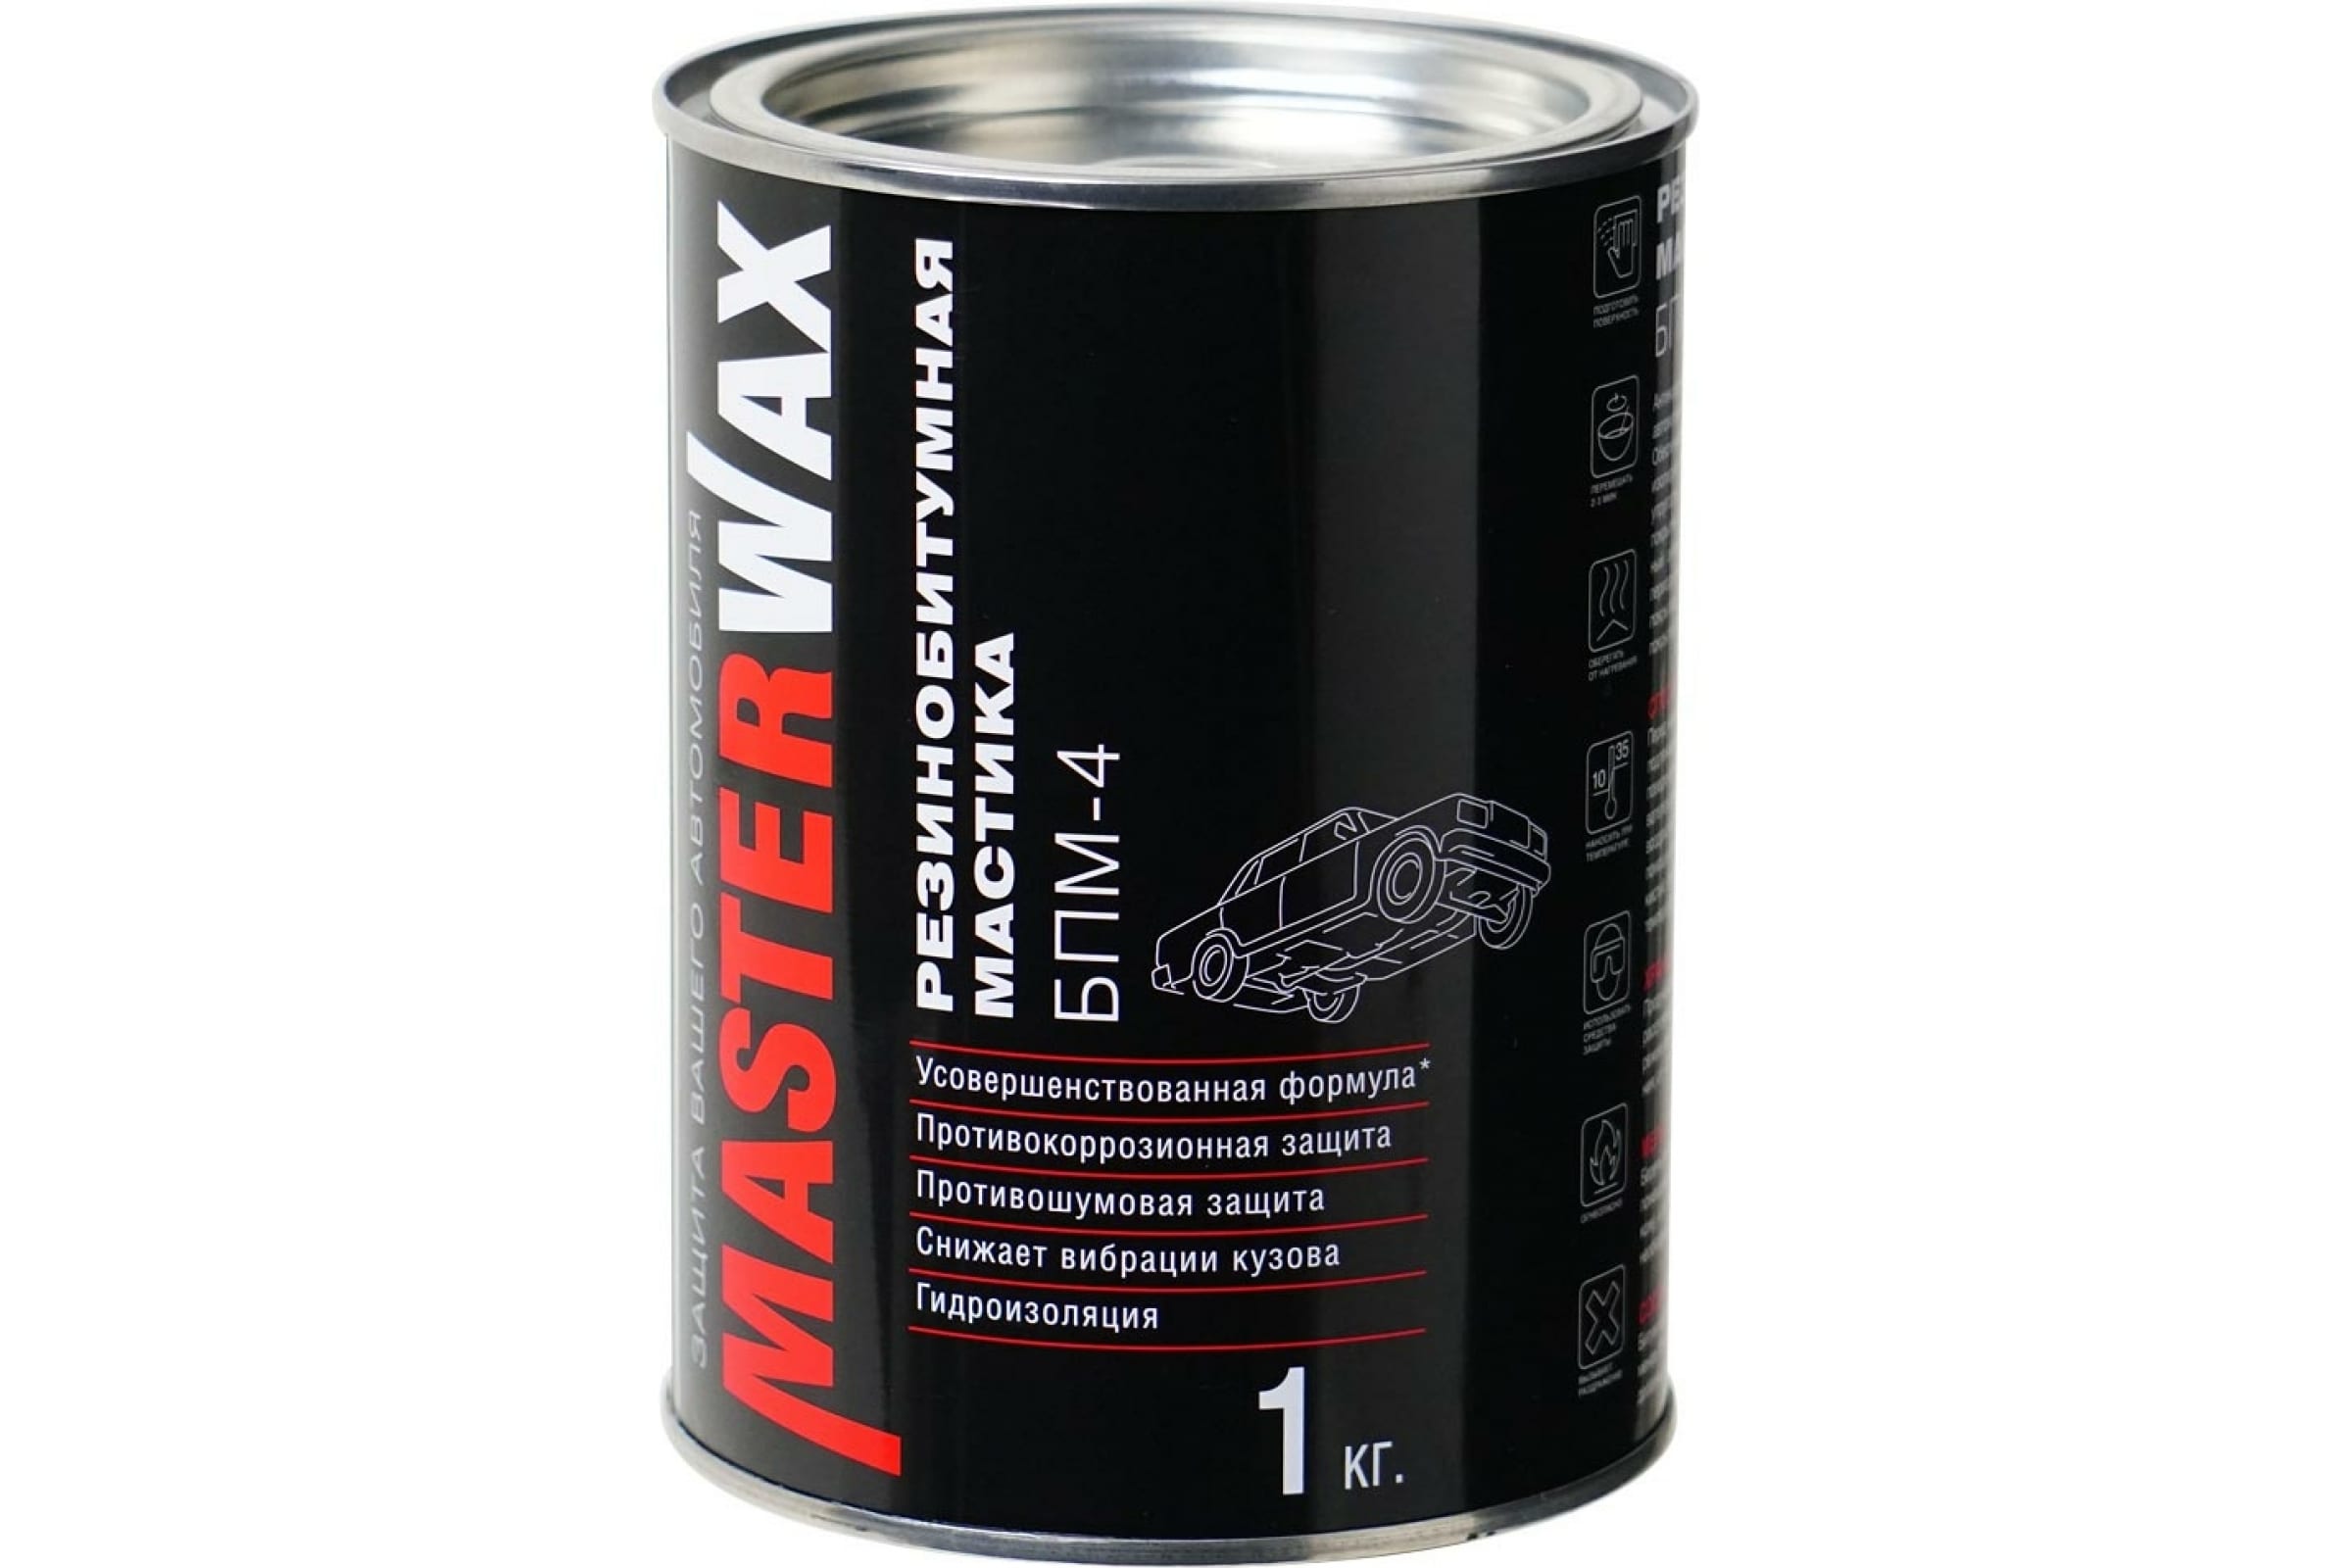 MasterWax Мастика резино-битумная БПМ-4 (1кг) (доп. ингибитор коррозии) (Masterwax)